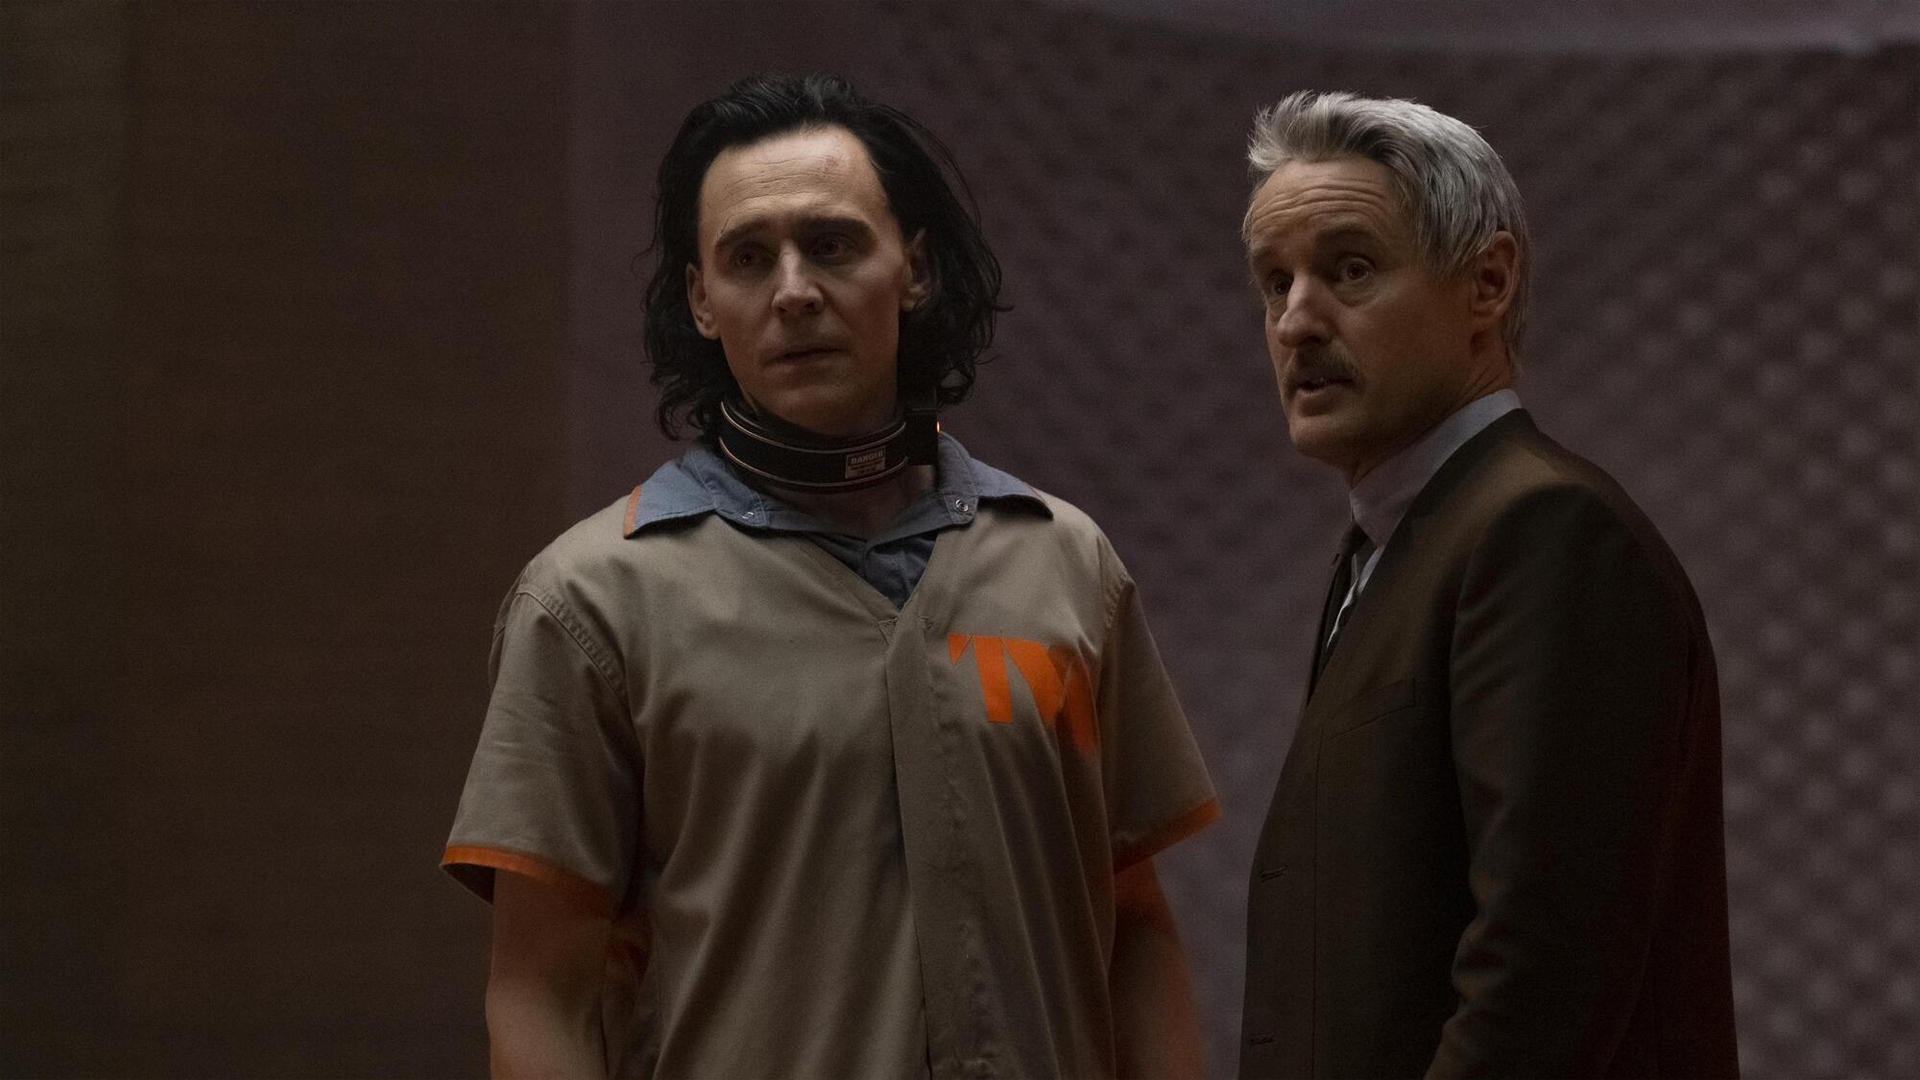 Tom Hiddleston and Owen Wilson as Loki and Mobius in Loki episode 1